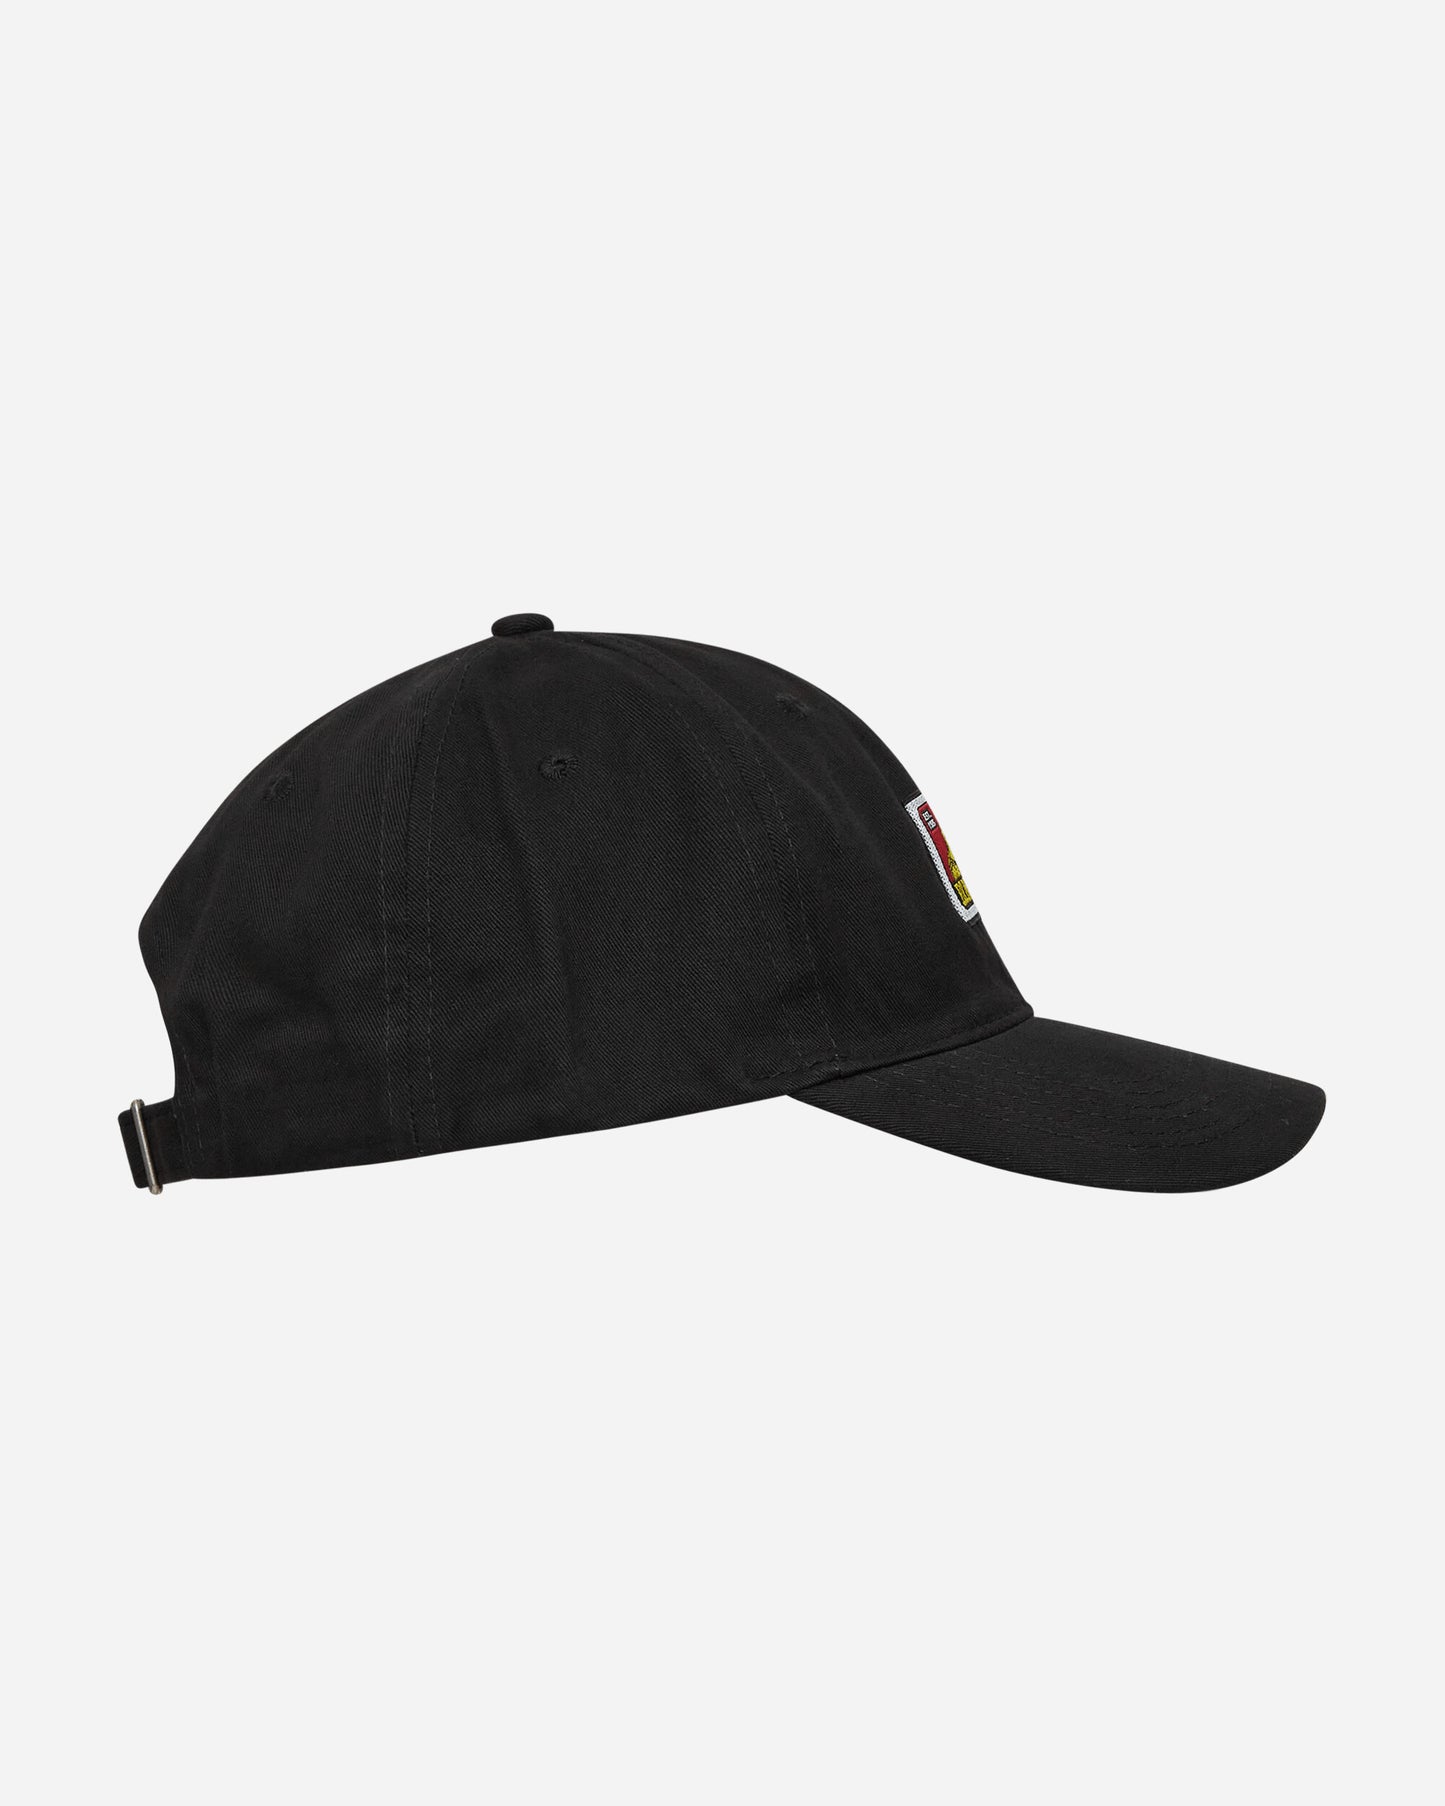 Ben Davis Cotton Twill Baseball Cap Black Hats Caps BEN9230 001